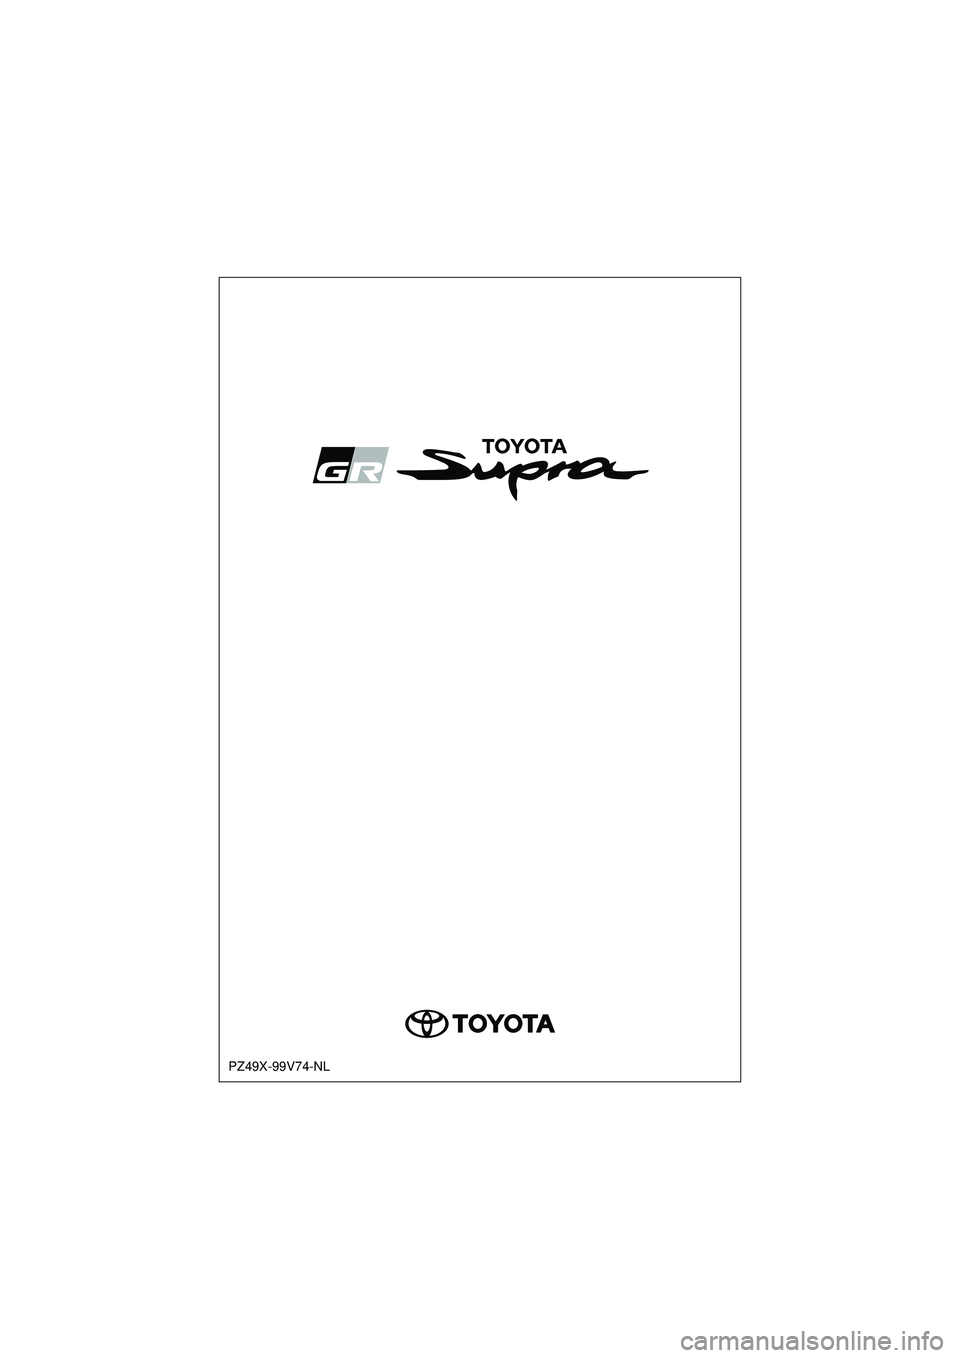 TOYOTA SUPRA 2020  Instructieboekje (in Dutch) Handleiding Supra
PZ49X-99V74-NL
Supra_OM_General_OM99V80E_1_1911.book  Page 1  Thursday, October 31, 2019  2:57 PM 